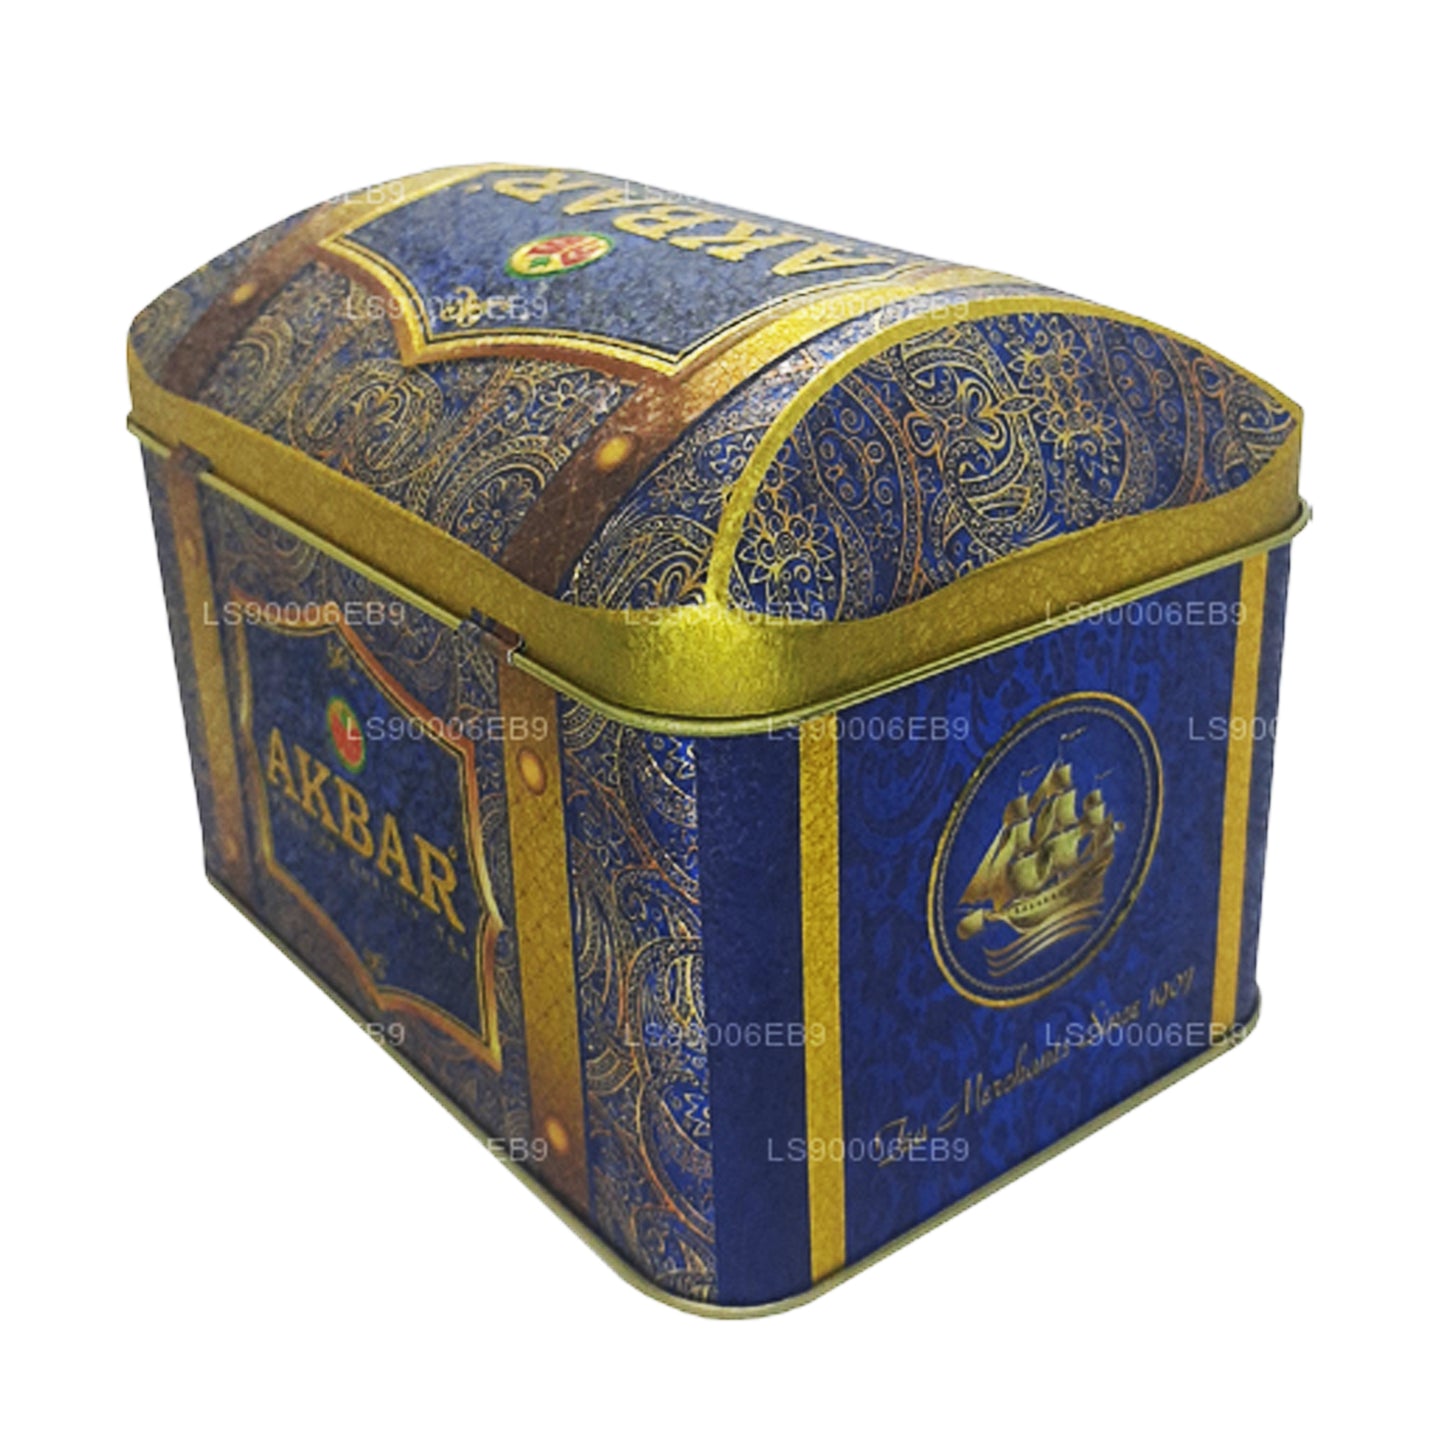 Akbar Exclusive Collection Oriental Mystery Treasure Box (250g)